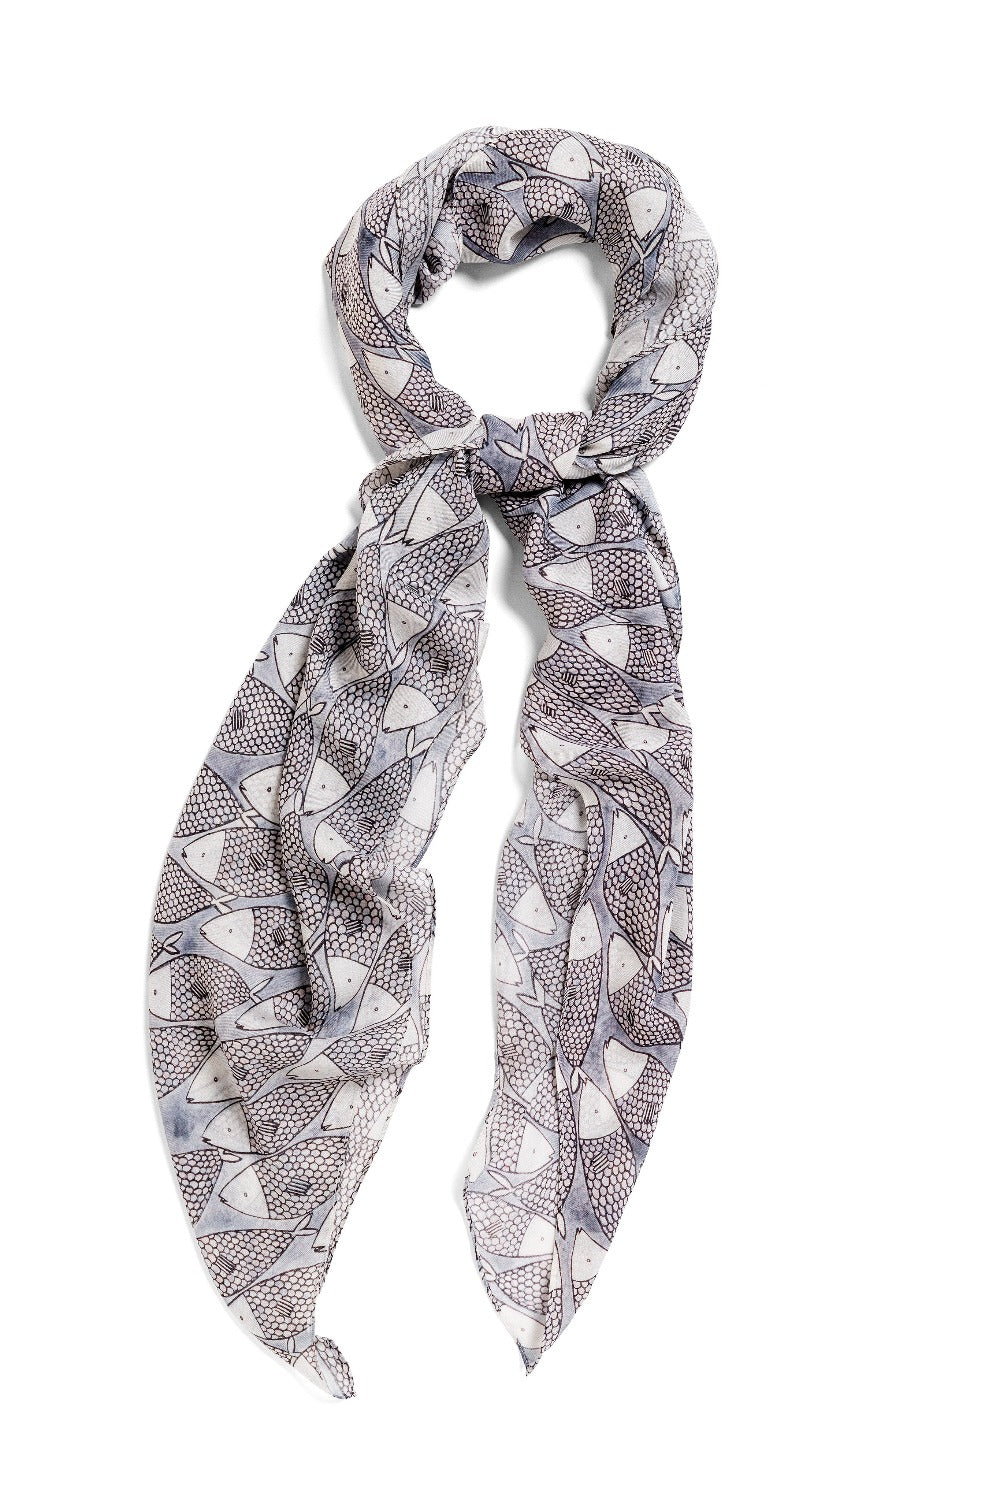 Big Sardines square modal cashmere scarf by Seth B. Minkin